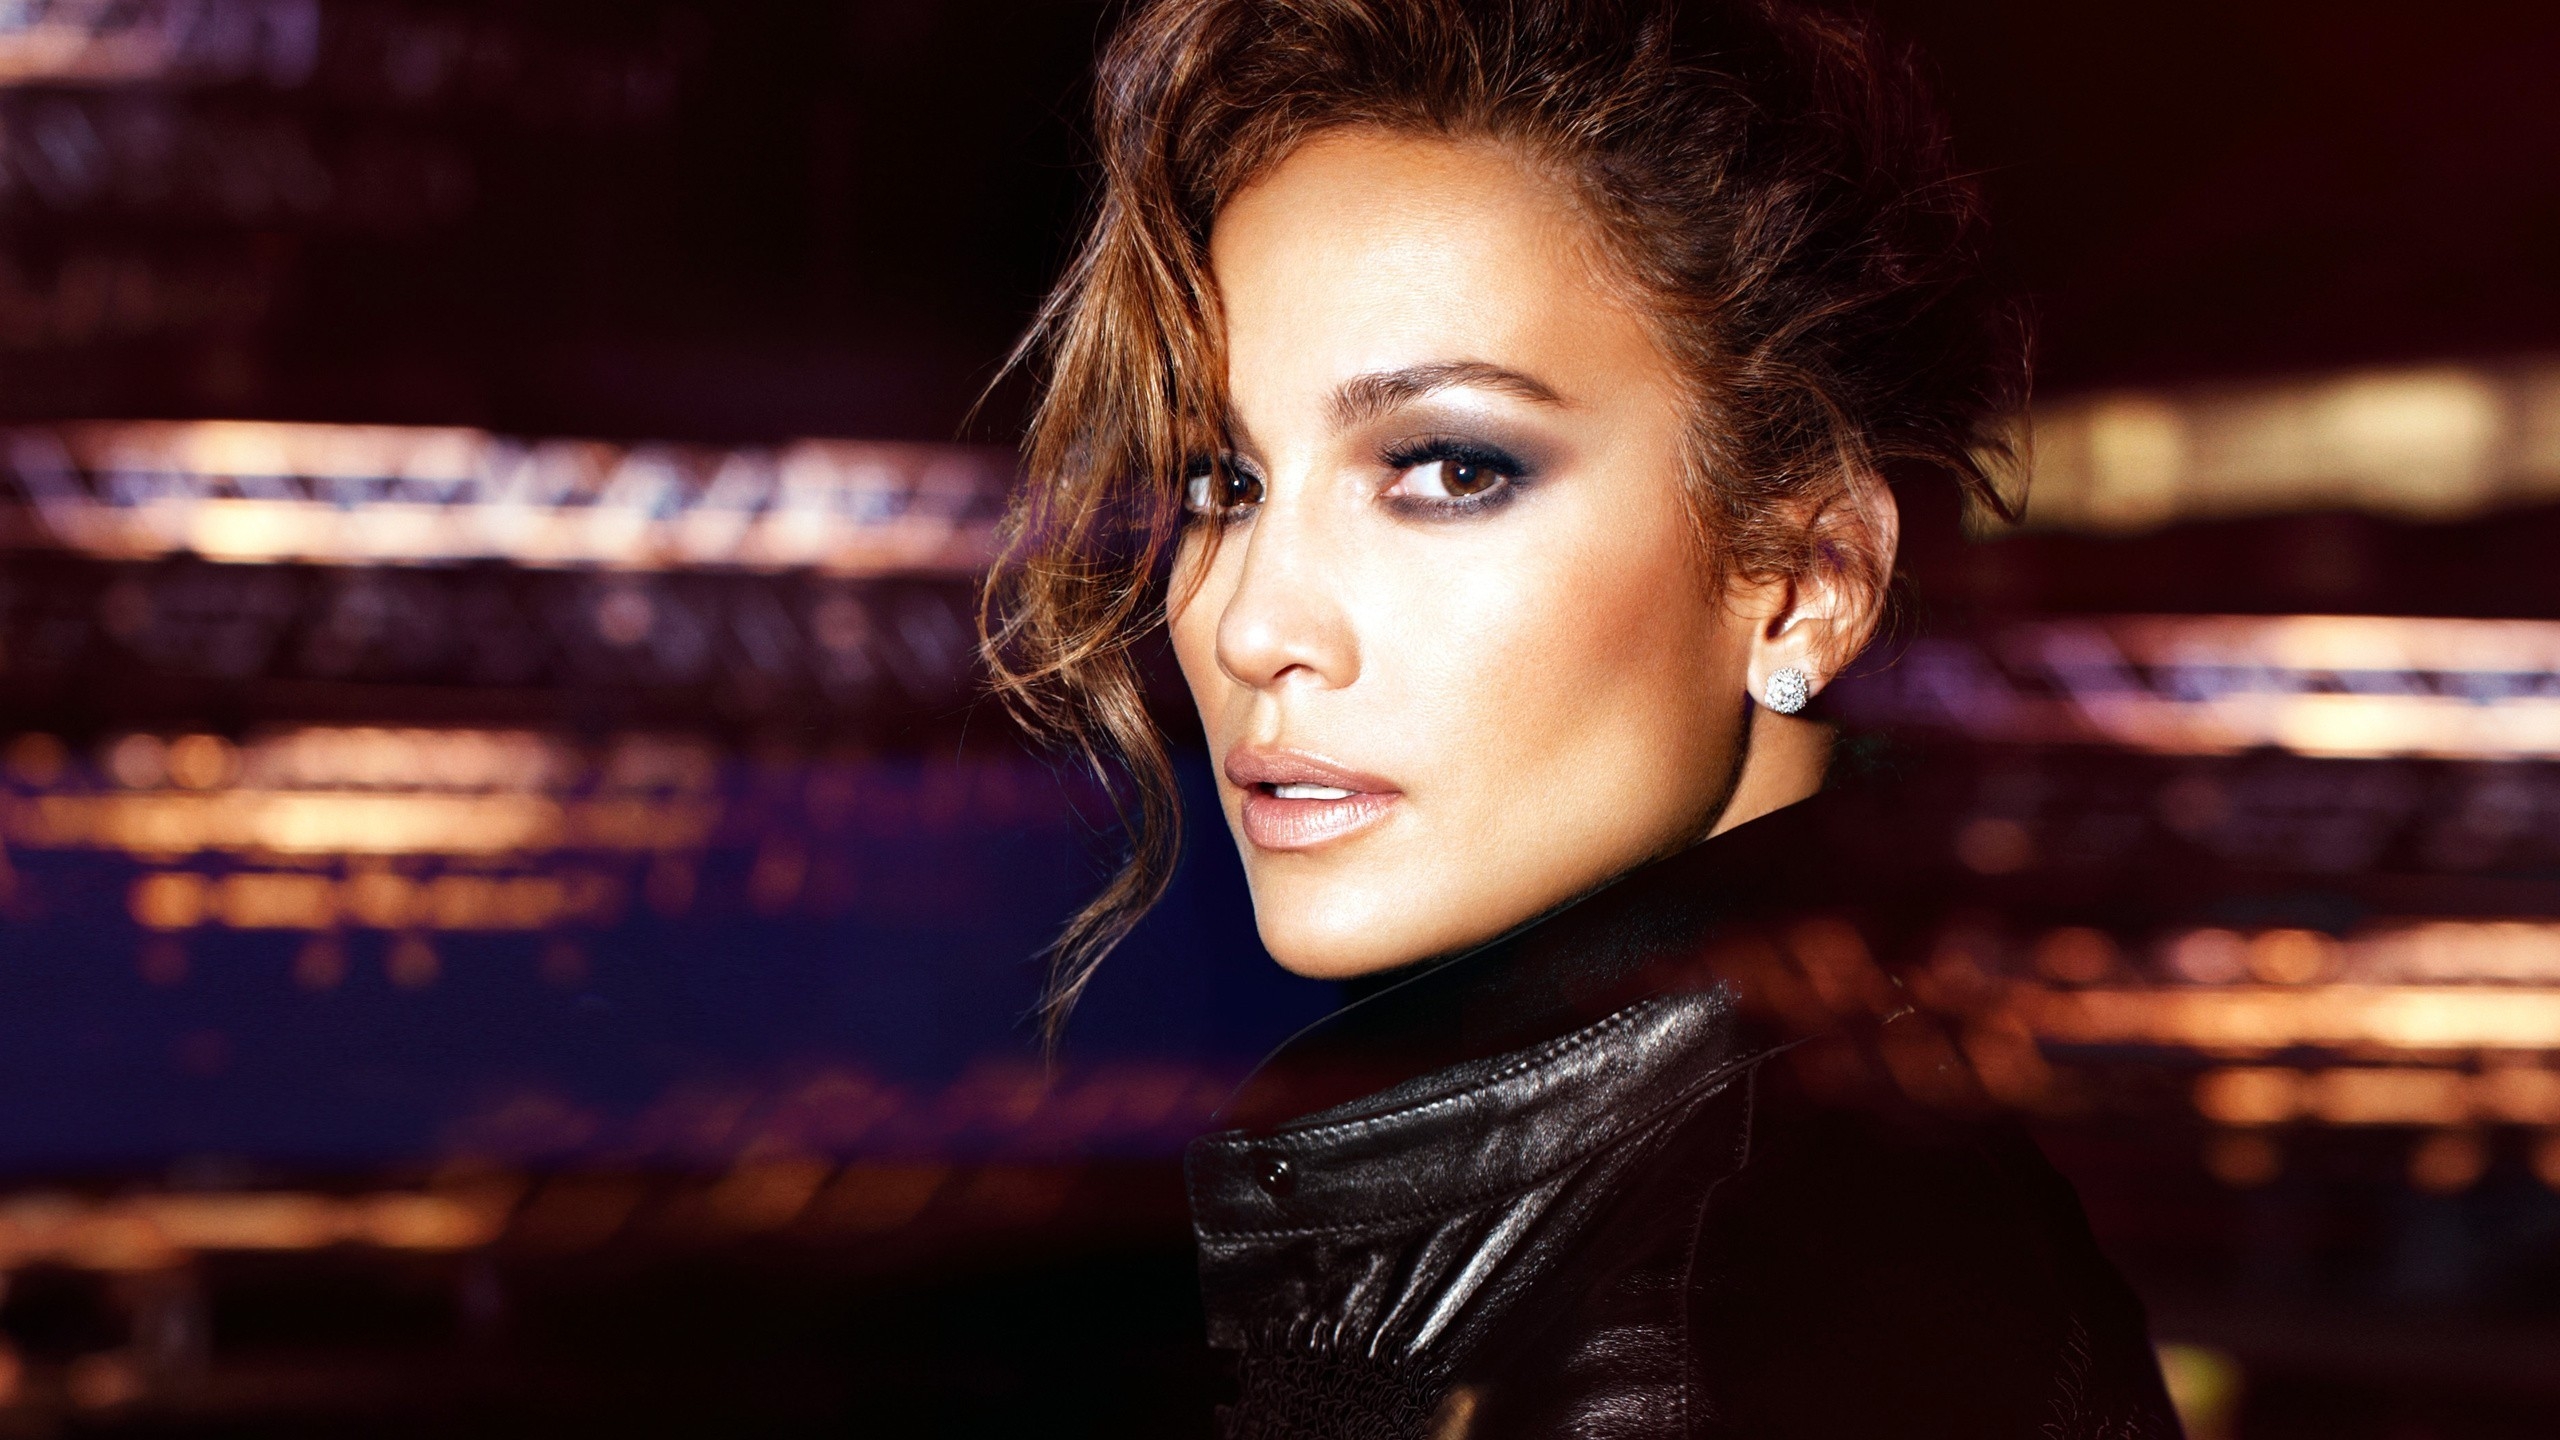 Jennifer Lopez Cool for 2560x1440 HDTV resolution